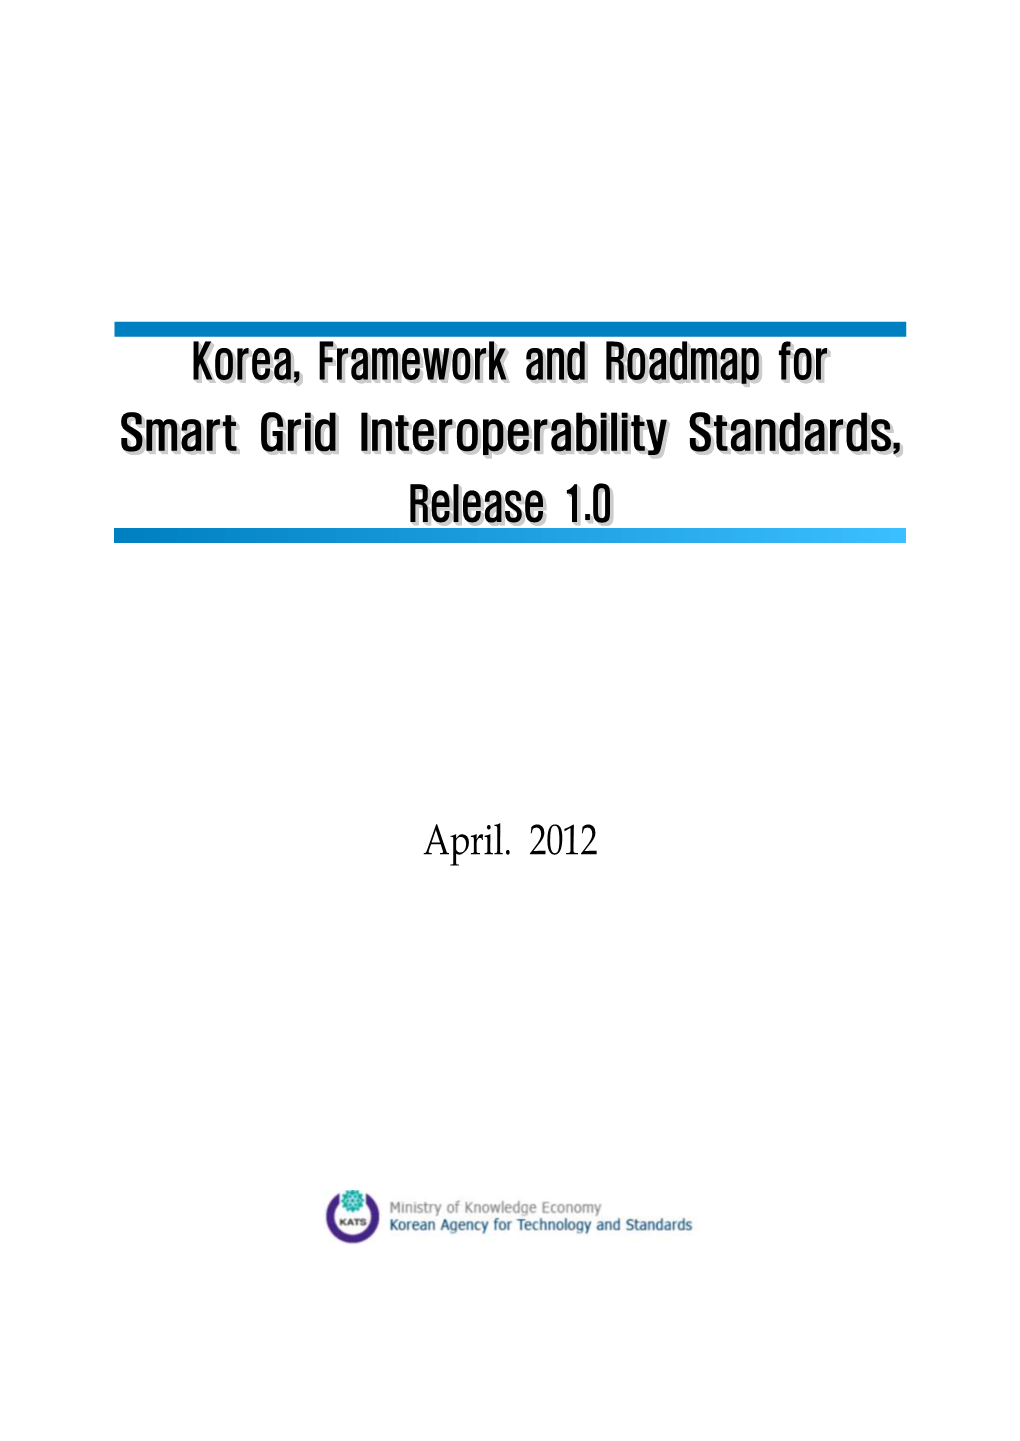 Korea, Framework and Roadmap for Smart Grid Interoperability